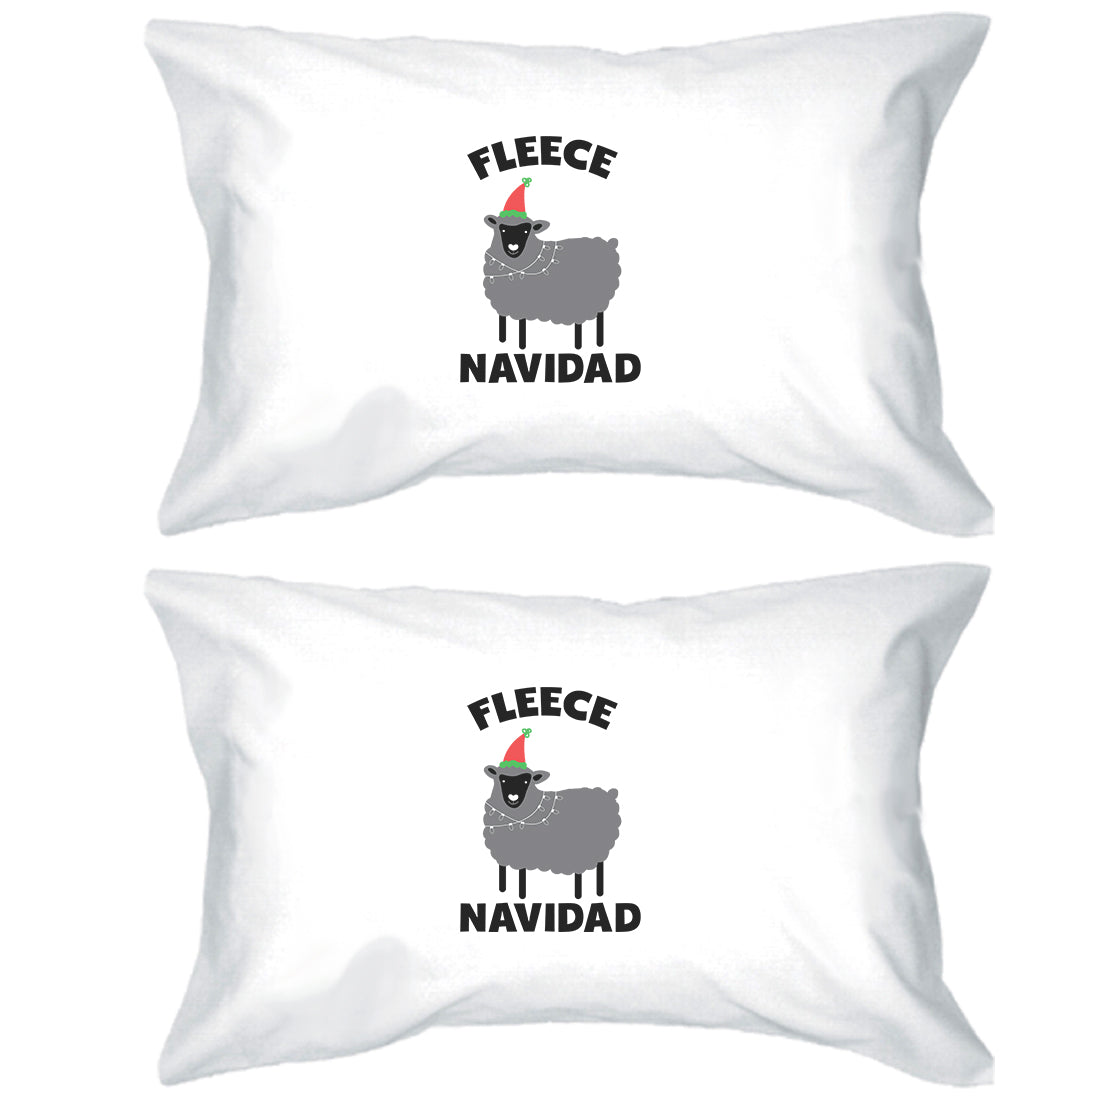 Fleece Navidad Pillowcases Standard Size Christmas Pillow Covers White